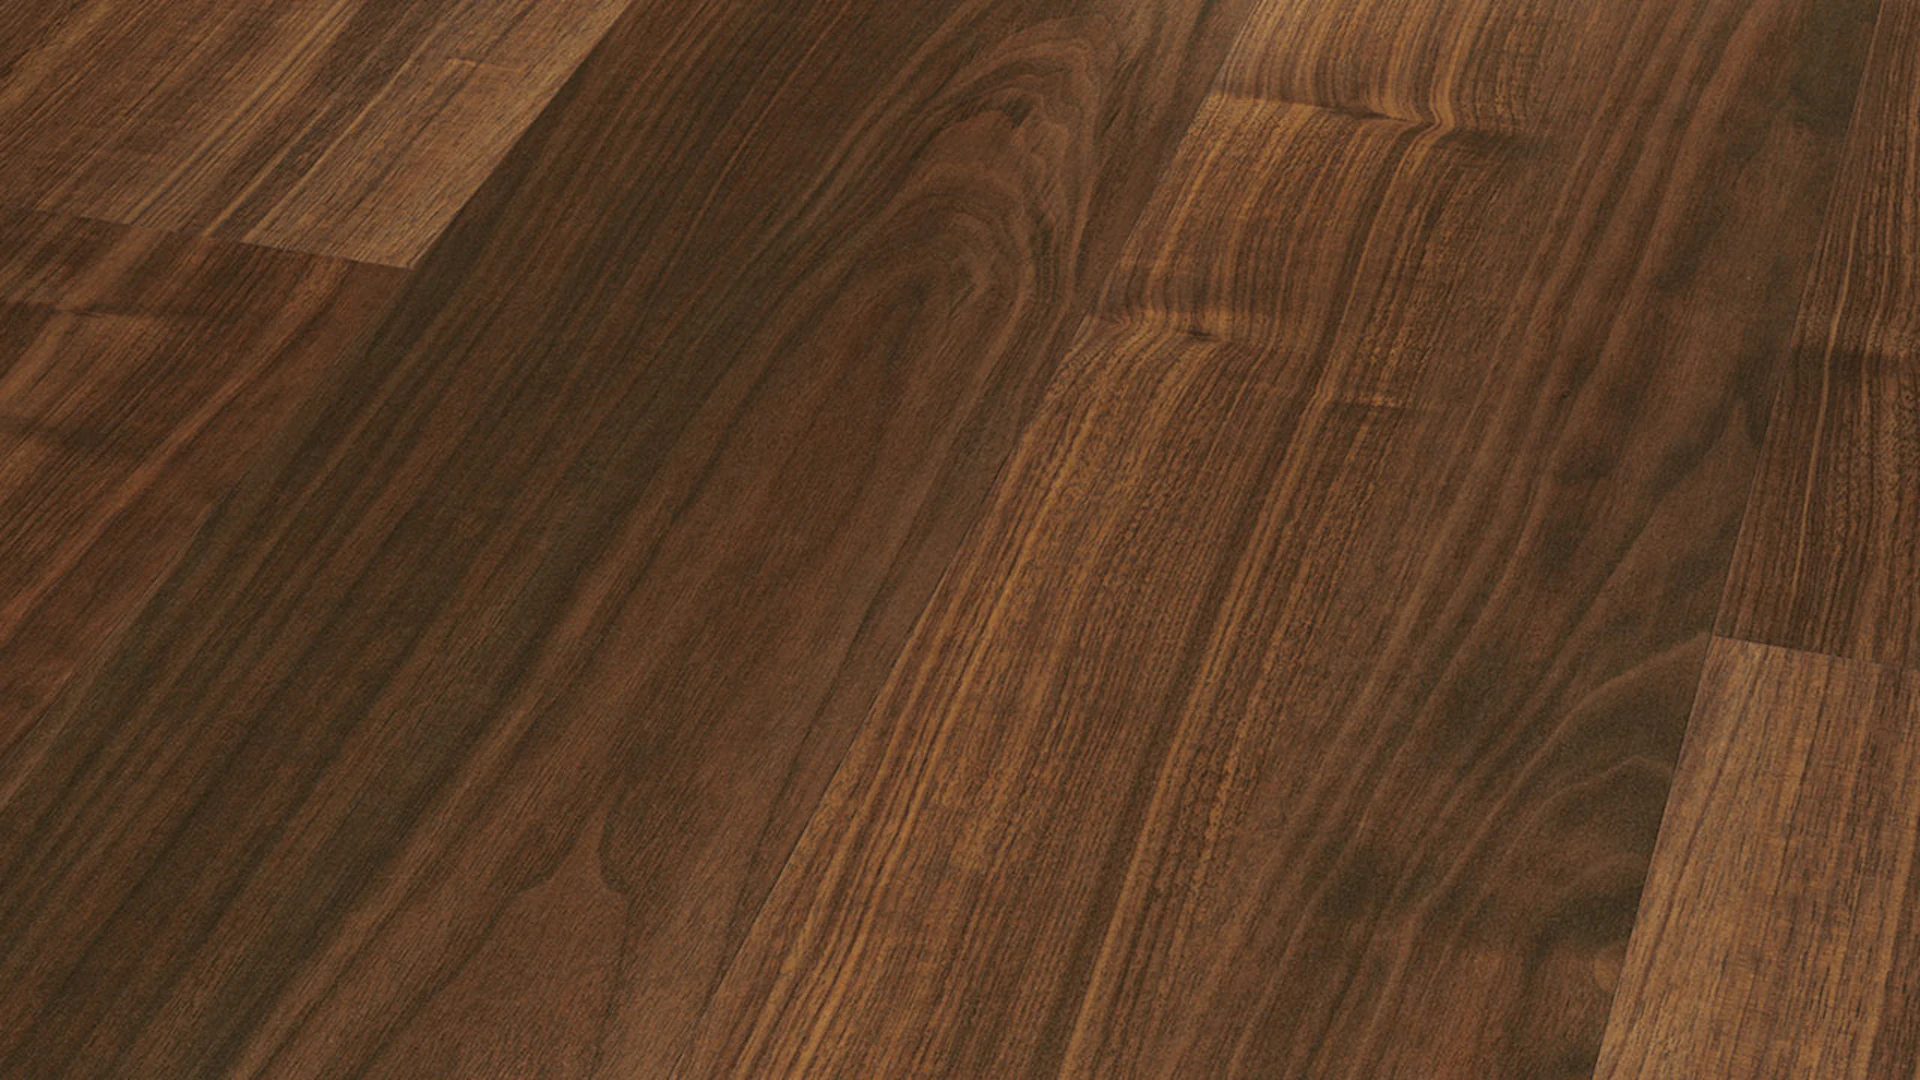 Parador laminate flooring - Basic 200 - walnut - wood texture - 1-plank wideplank